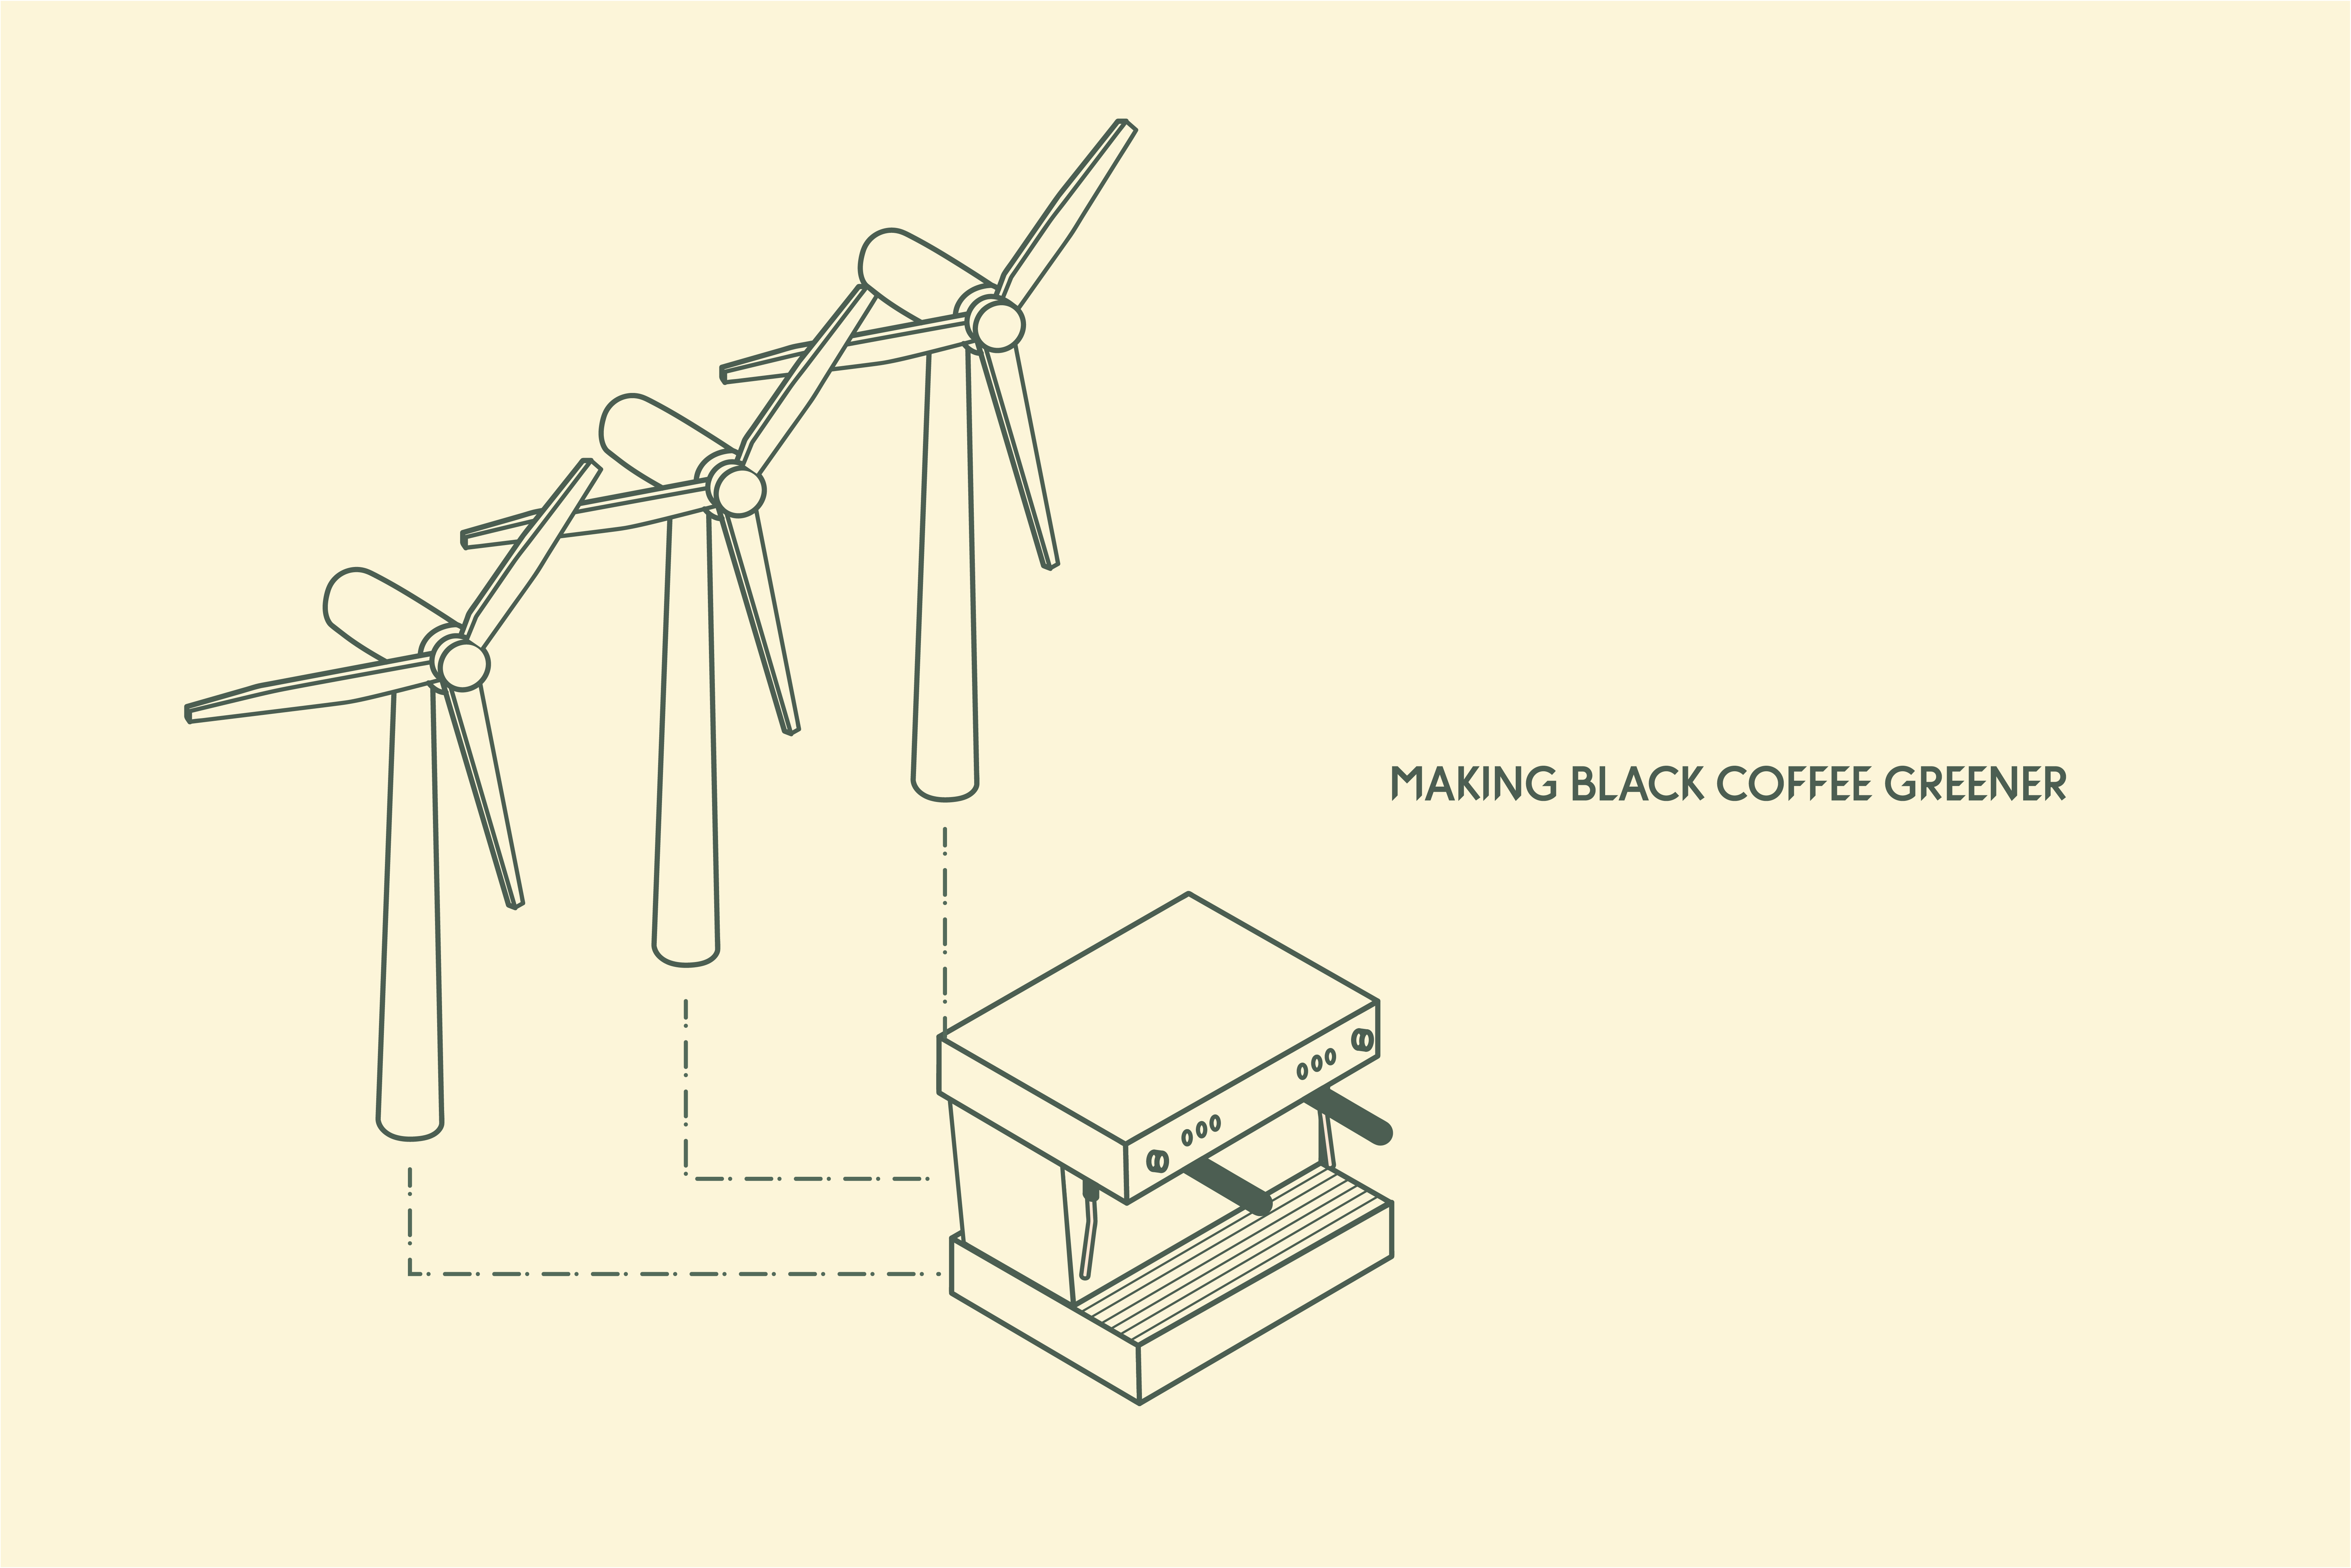 Making black coffee greener